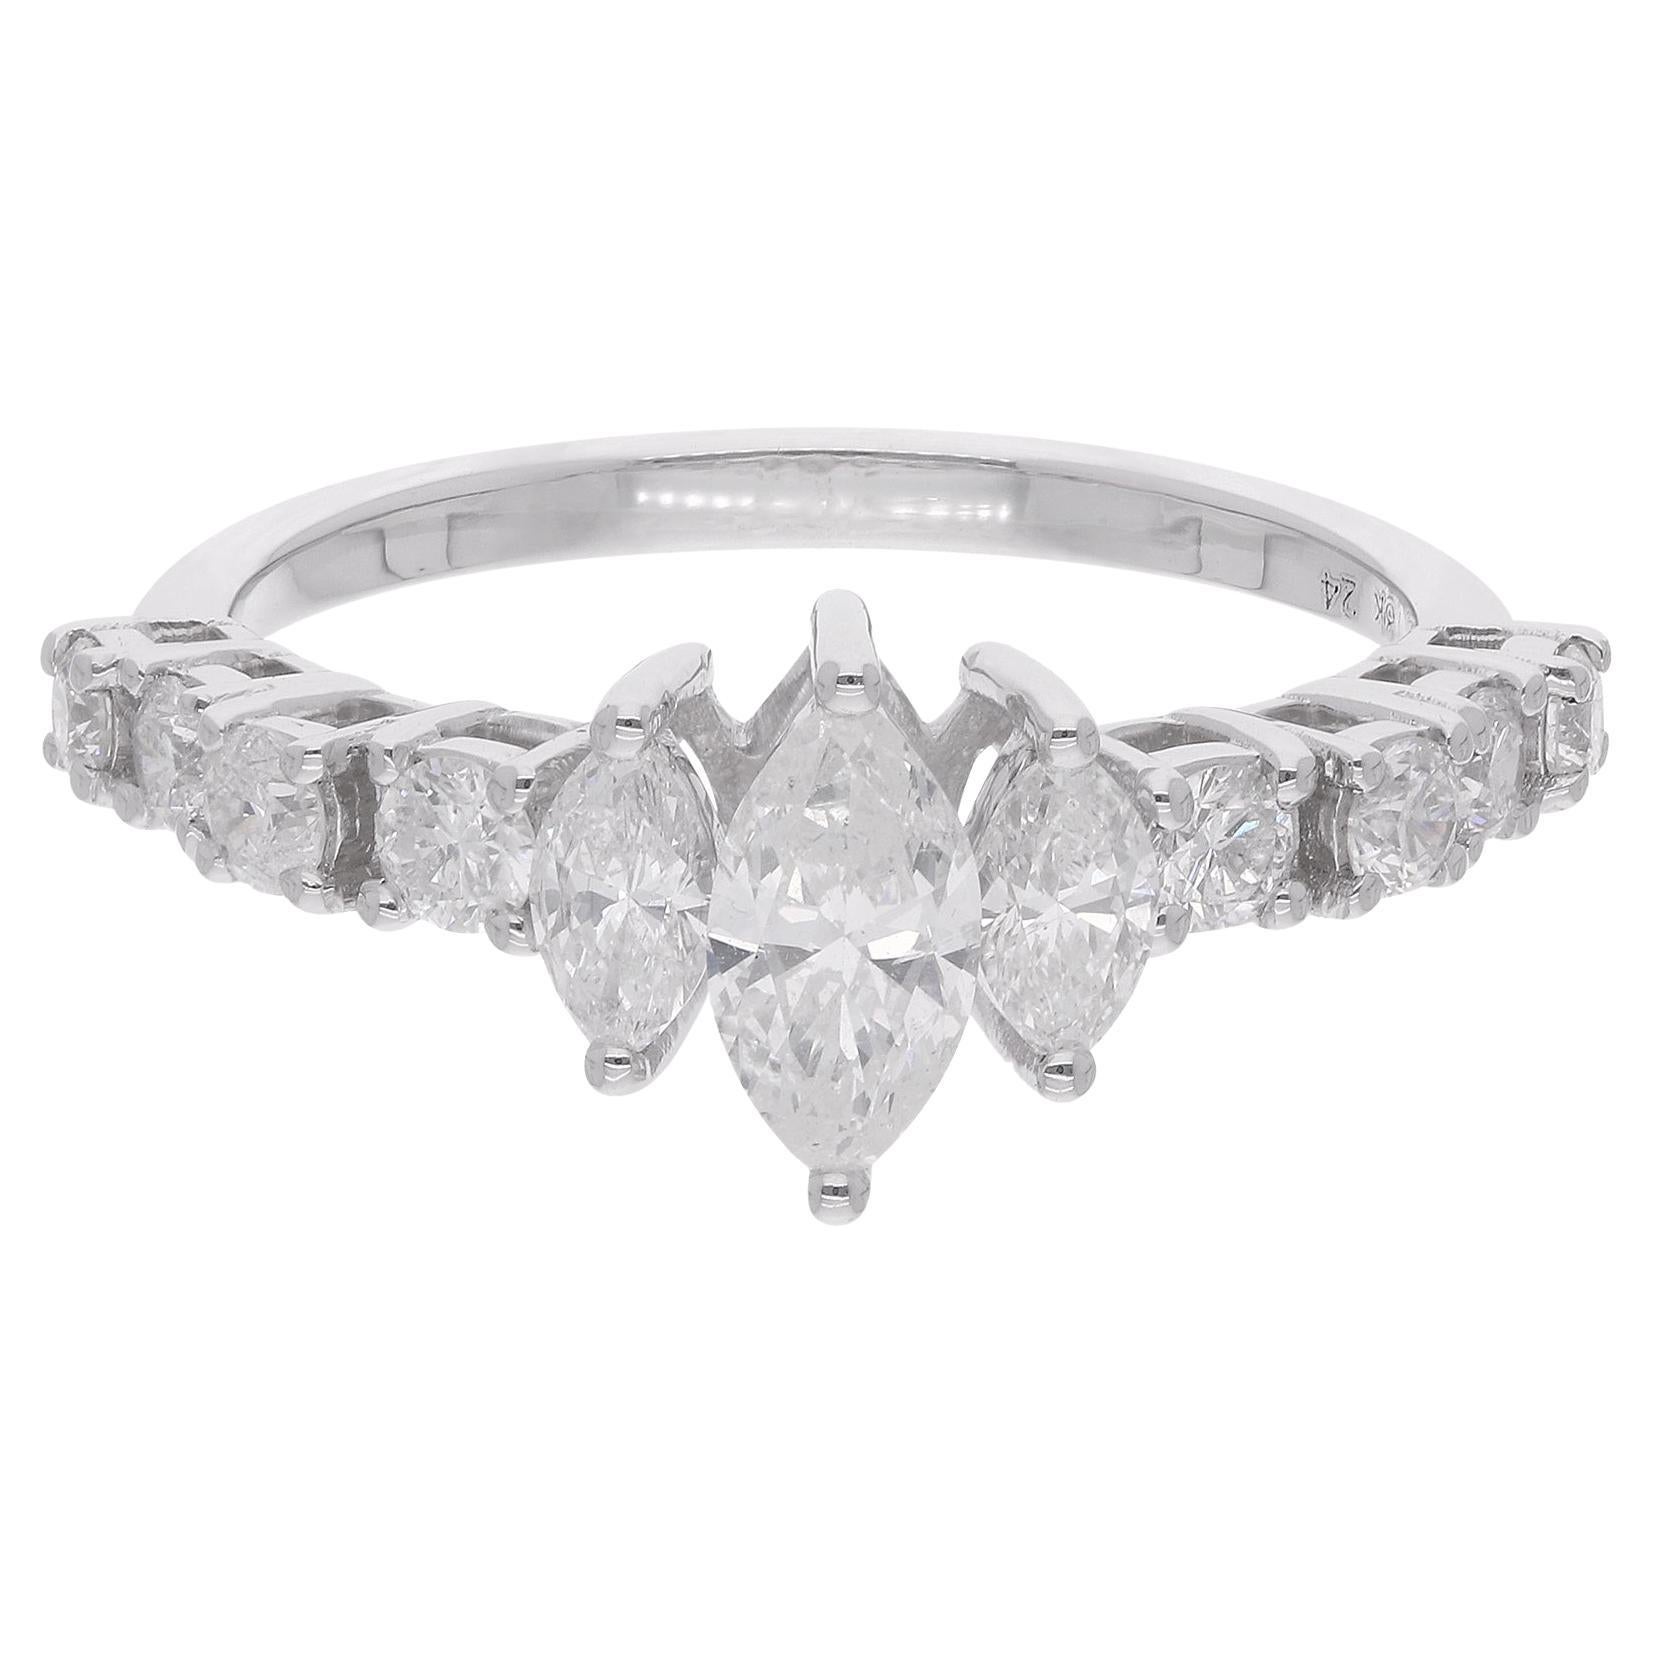 1.02 Carat Marquise & Round Diamond Ring 18 Karat White Gold Handmade Jewelry For Sale